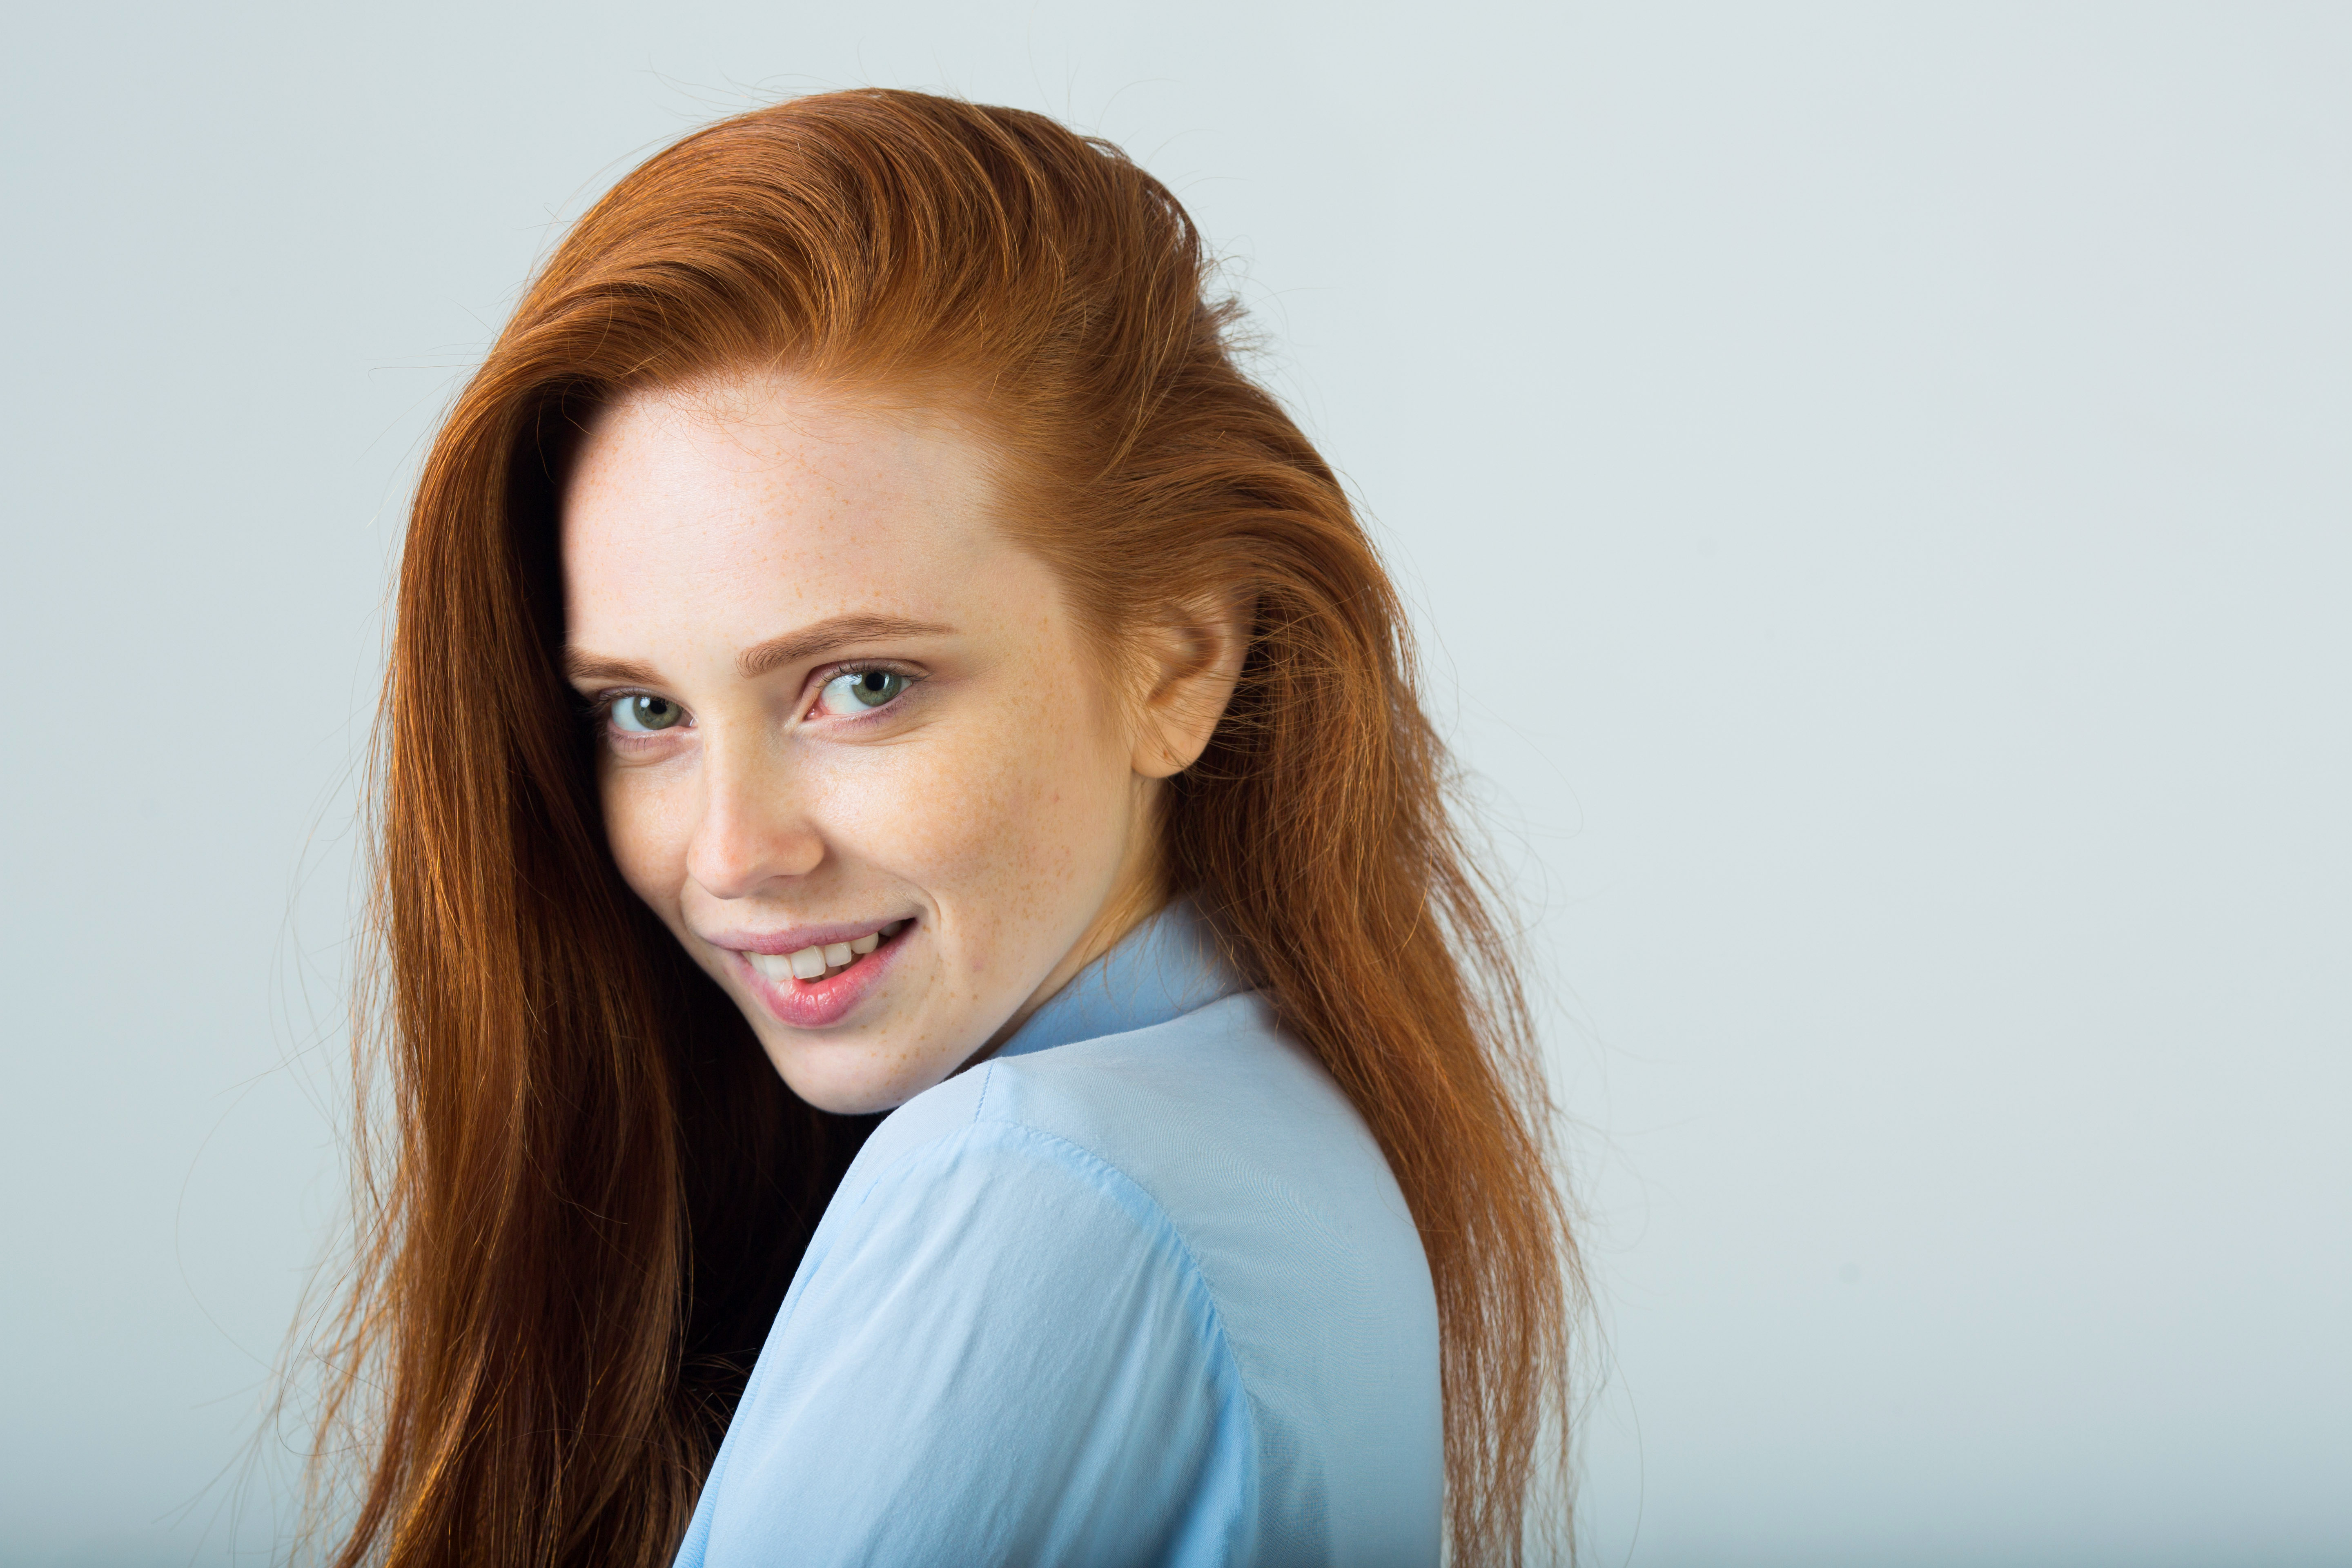 Argan Oil Hair Growth Benefits for Your Fine Locks